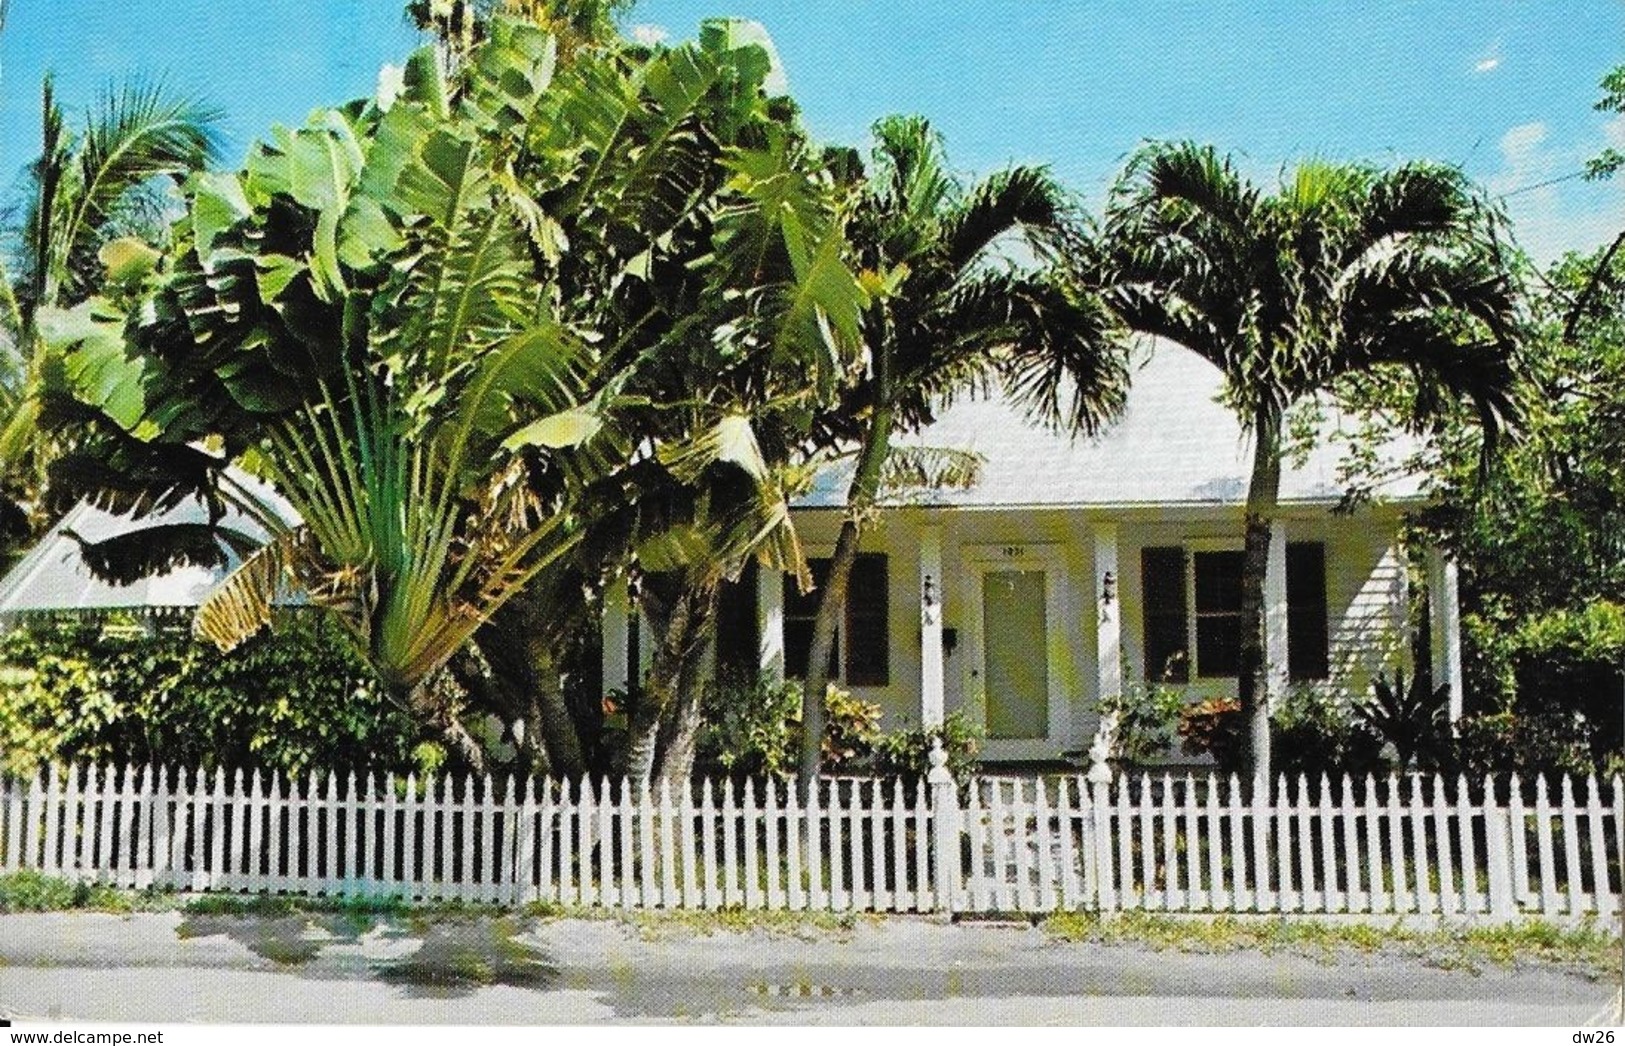 Tennessee Williams House, Duncan Street - Key West FL (Florida) - Key West & The Keys